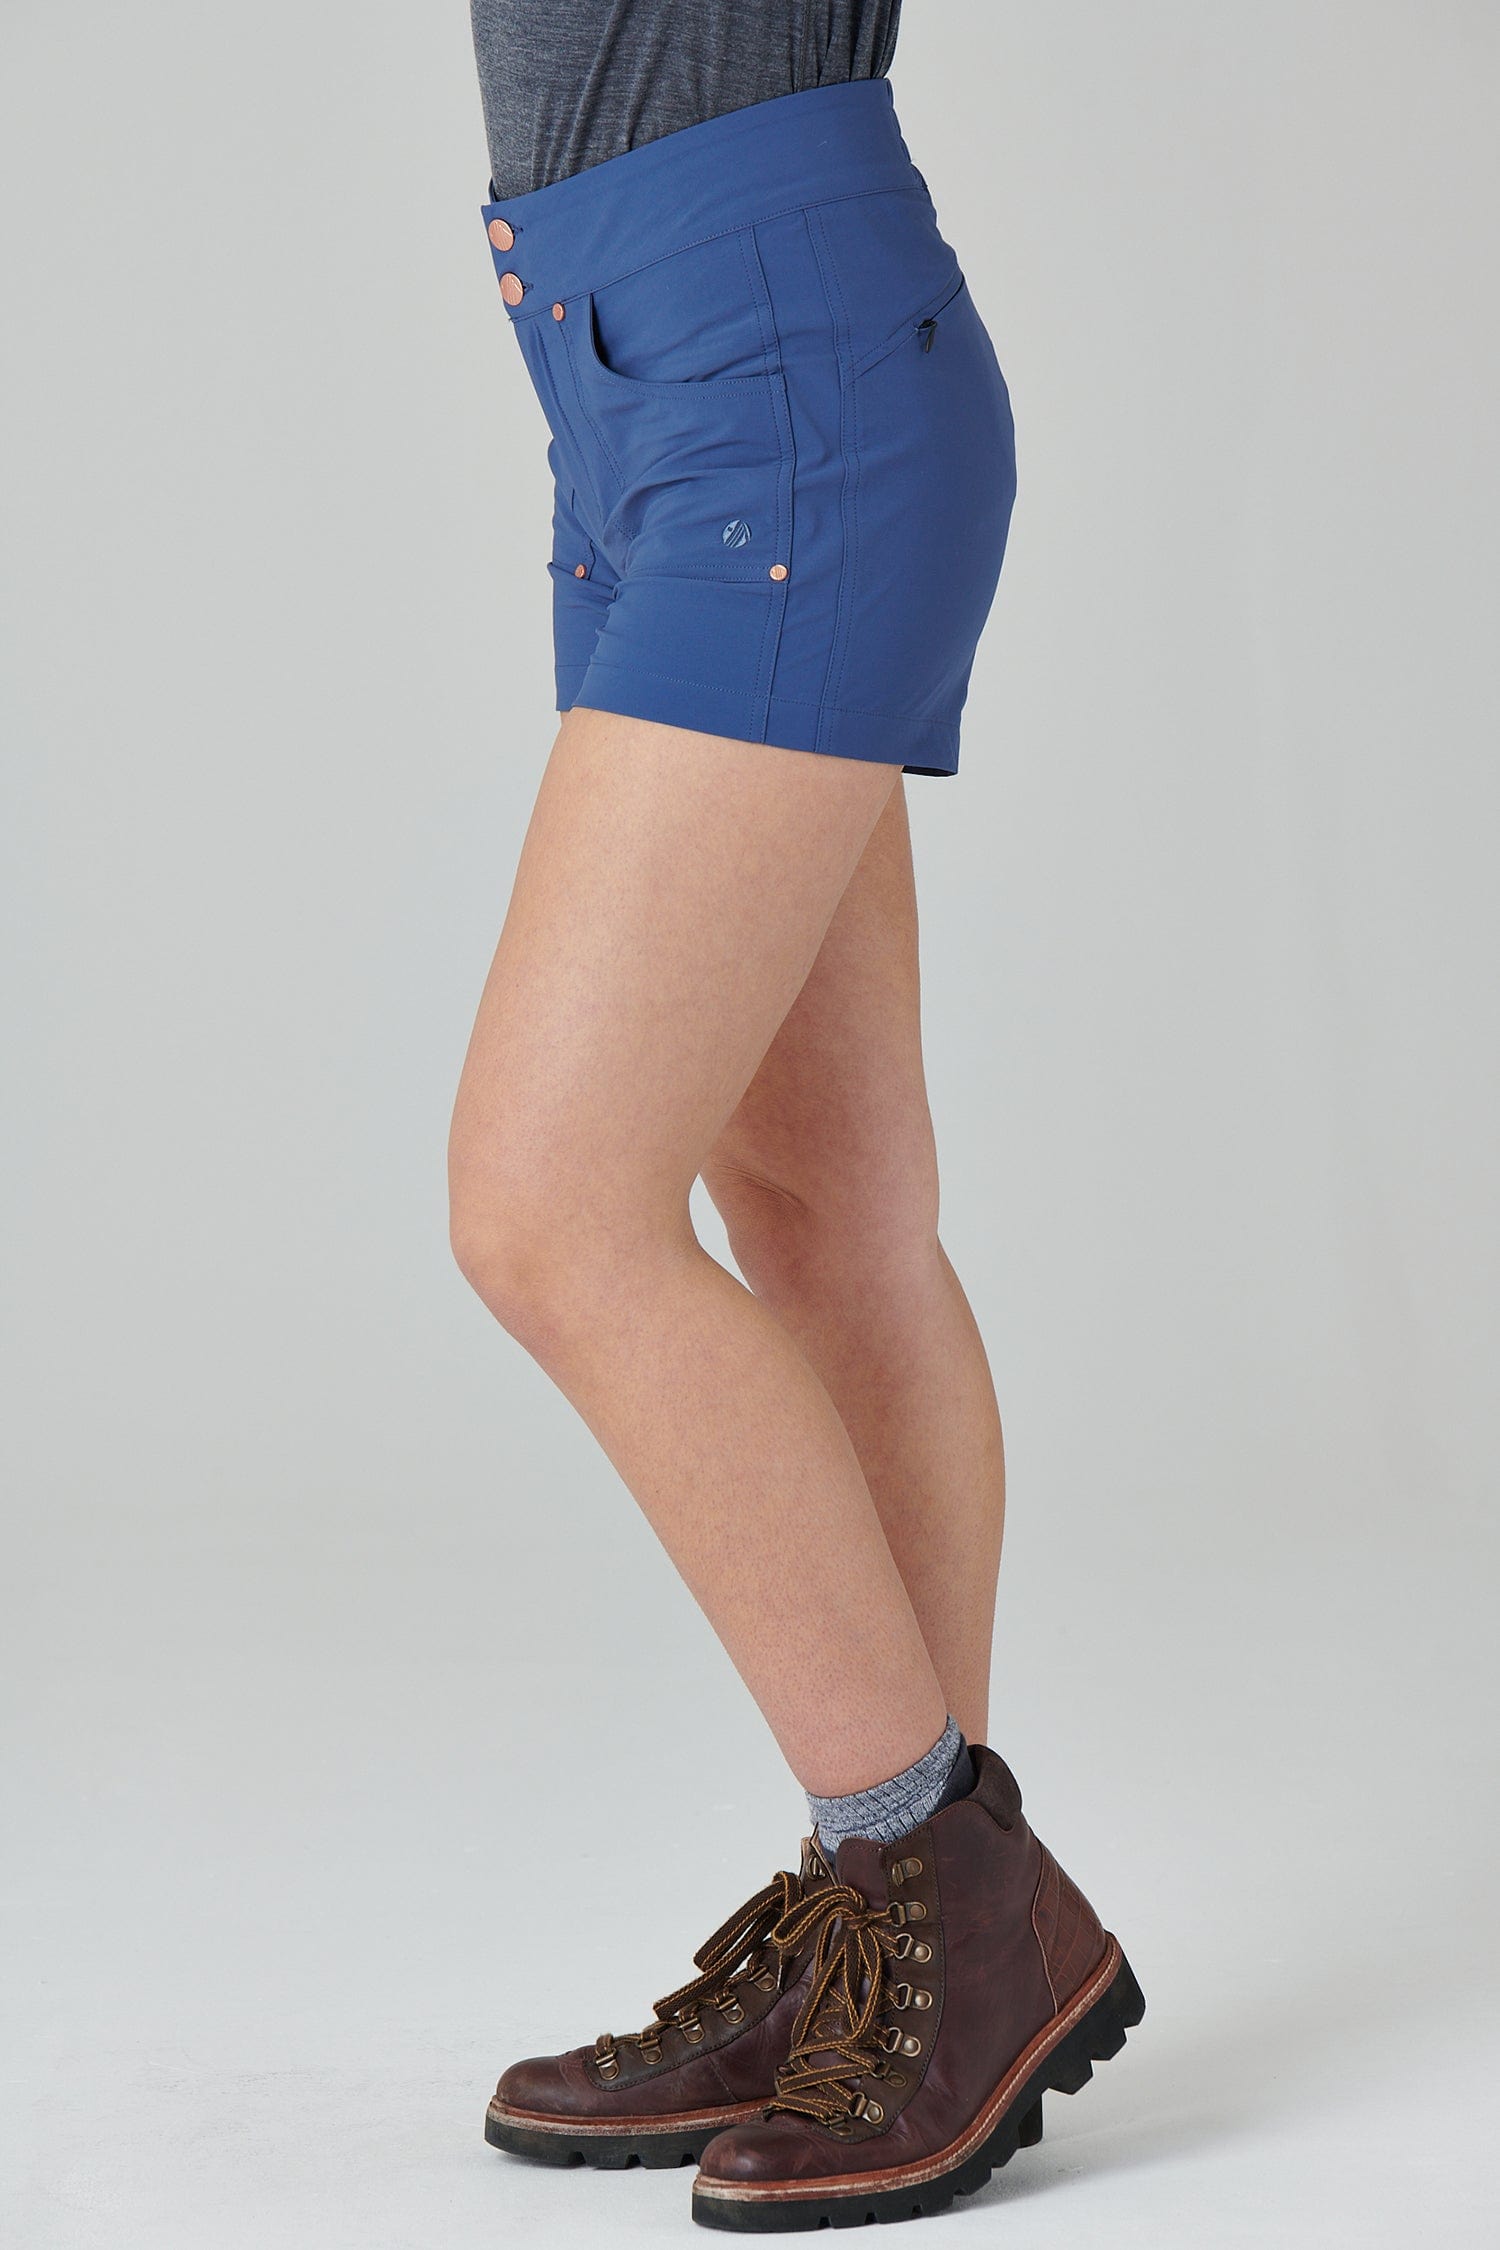 Trek Shorts - Steel Blue - 34 / Uk16 - Womens - Acai Outdoorwear